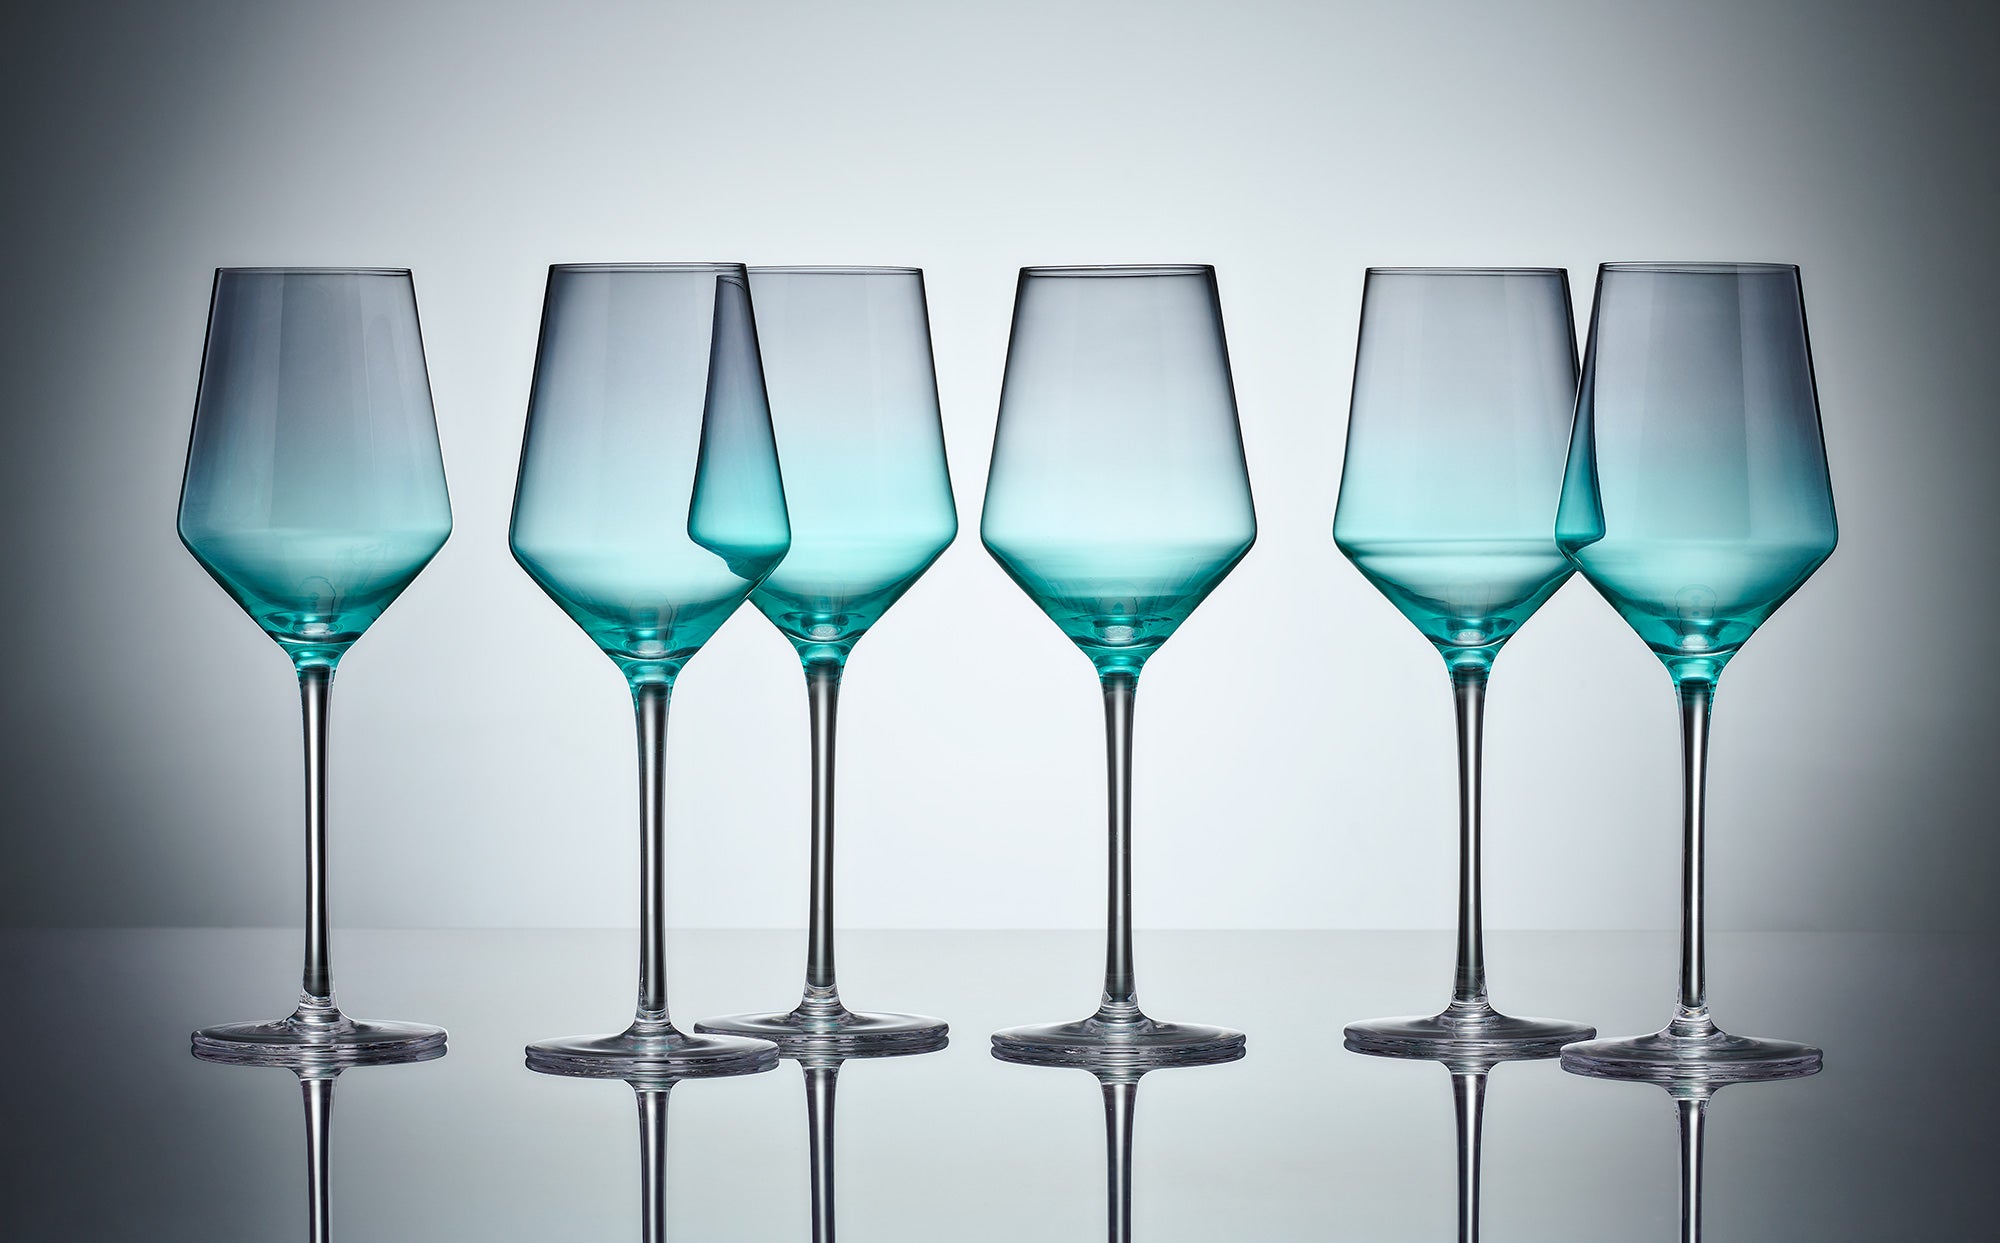 Set of 6 Wine Glasses - Ombre Design - Blue & Grey